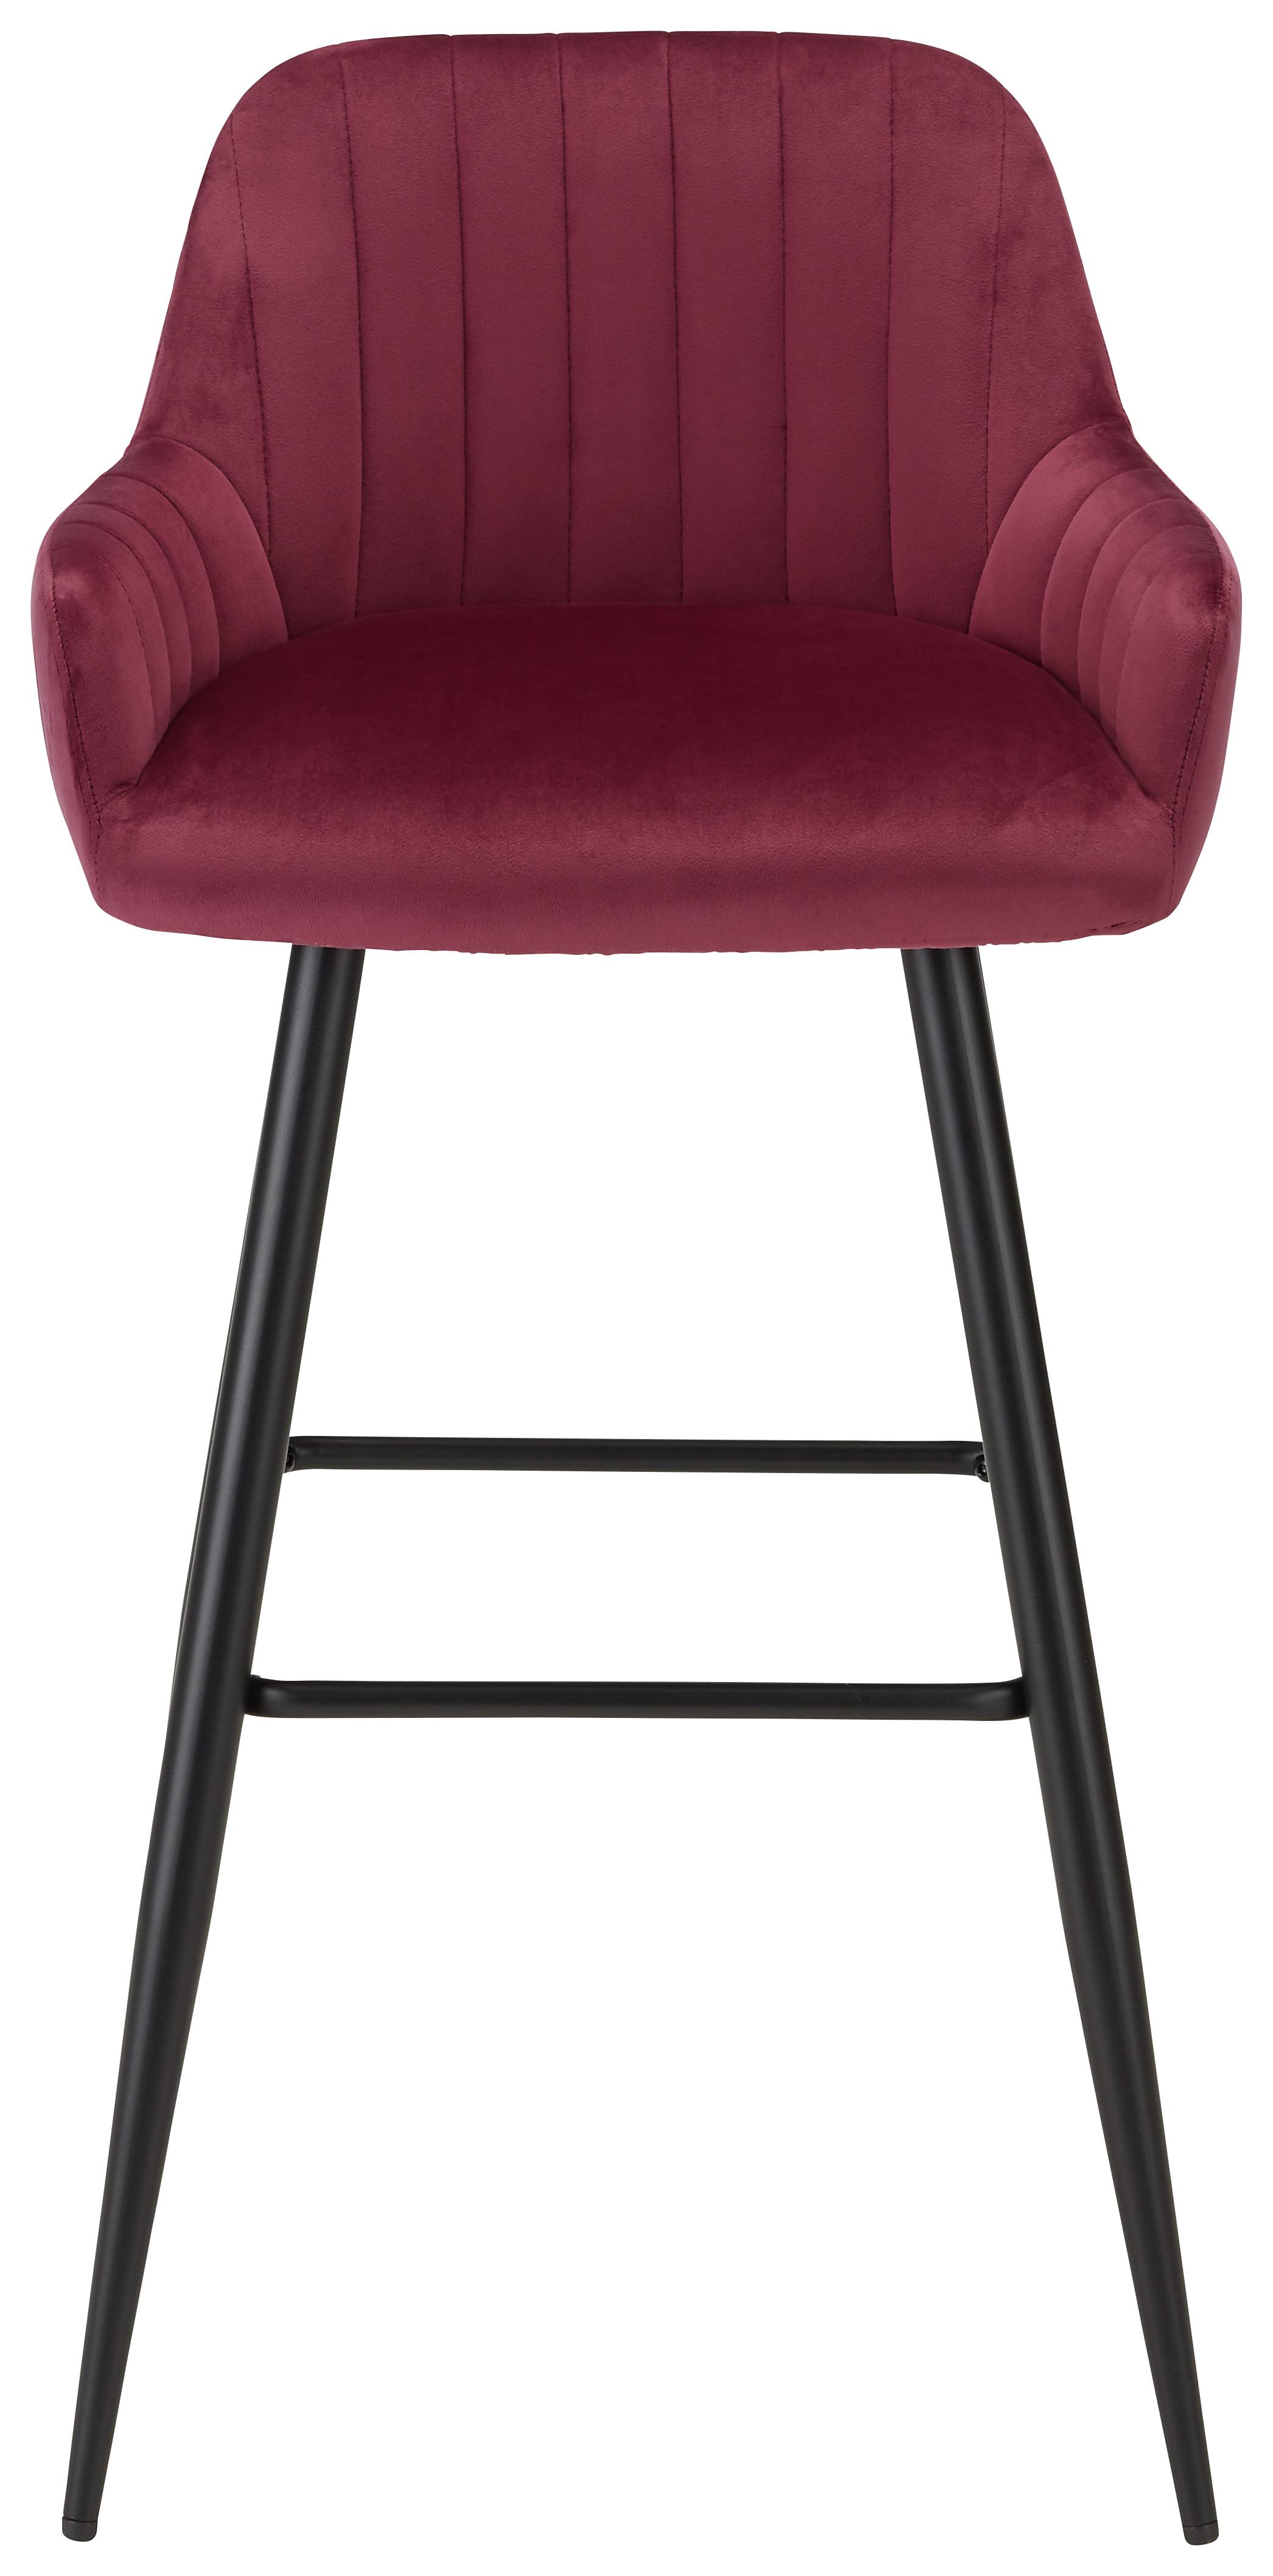 Barová Židle Martha - magenta/černá, Moderní, kov/textil (50/99/53,5cm) - Modern Living